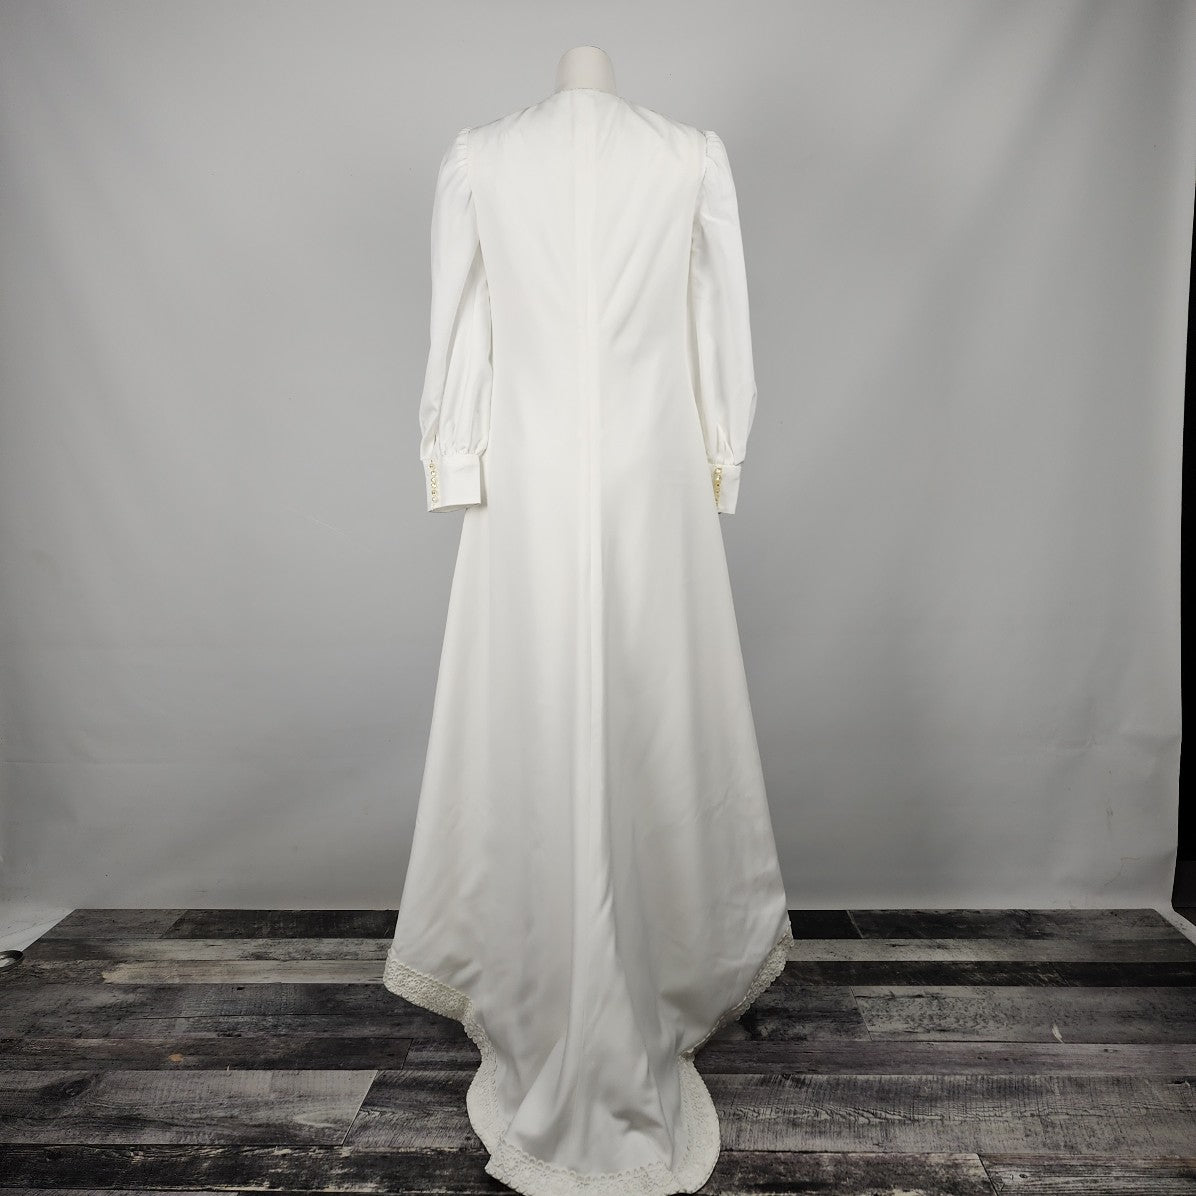 Vintage White Floral Two Piece Wedding Dress Size S